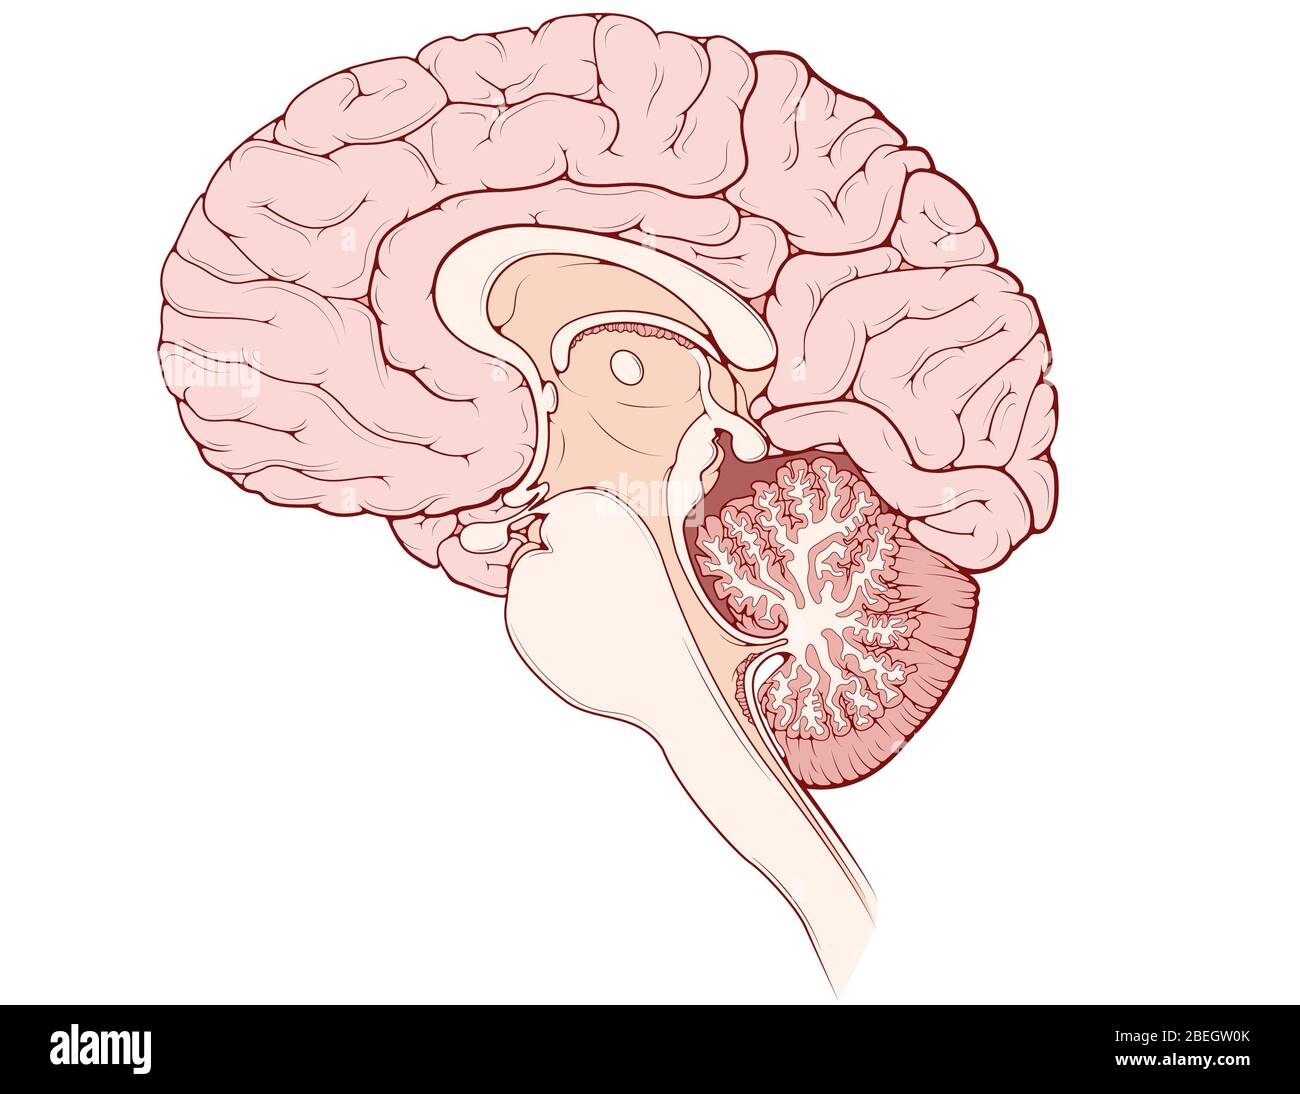 Cervello, vista medisagittale Foto Stock